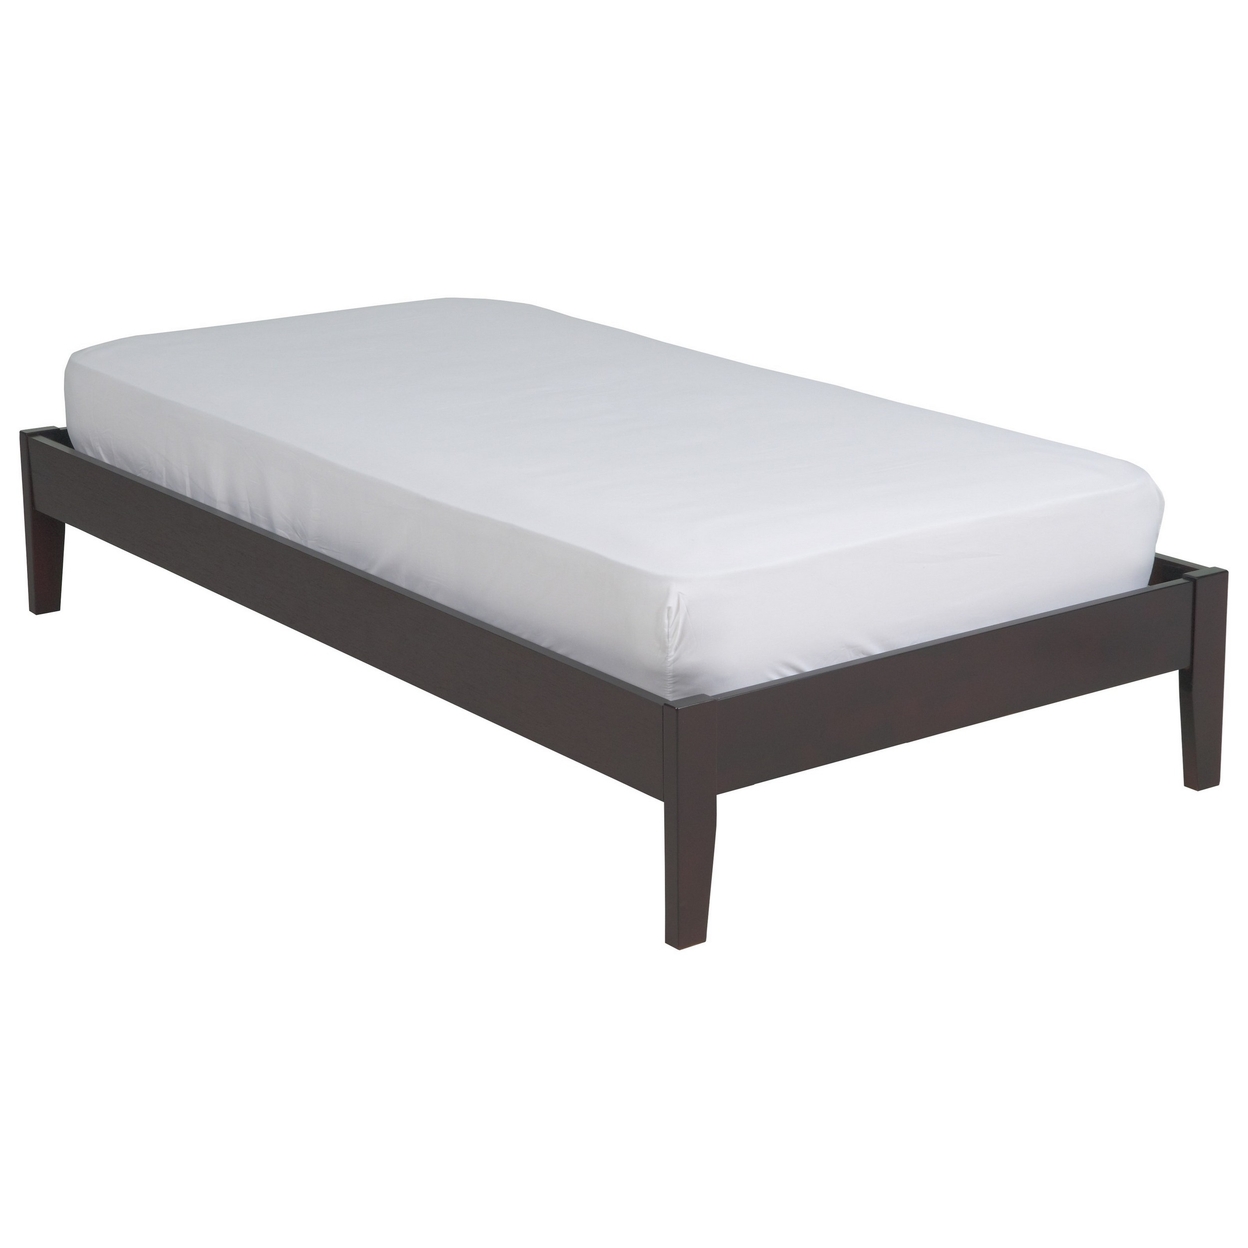 Evelyn Low Profile Twin Size Platform Bed, Slats, Rich Espresso Brown Wood- Saltoro Sherpi